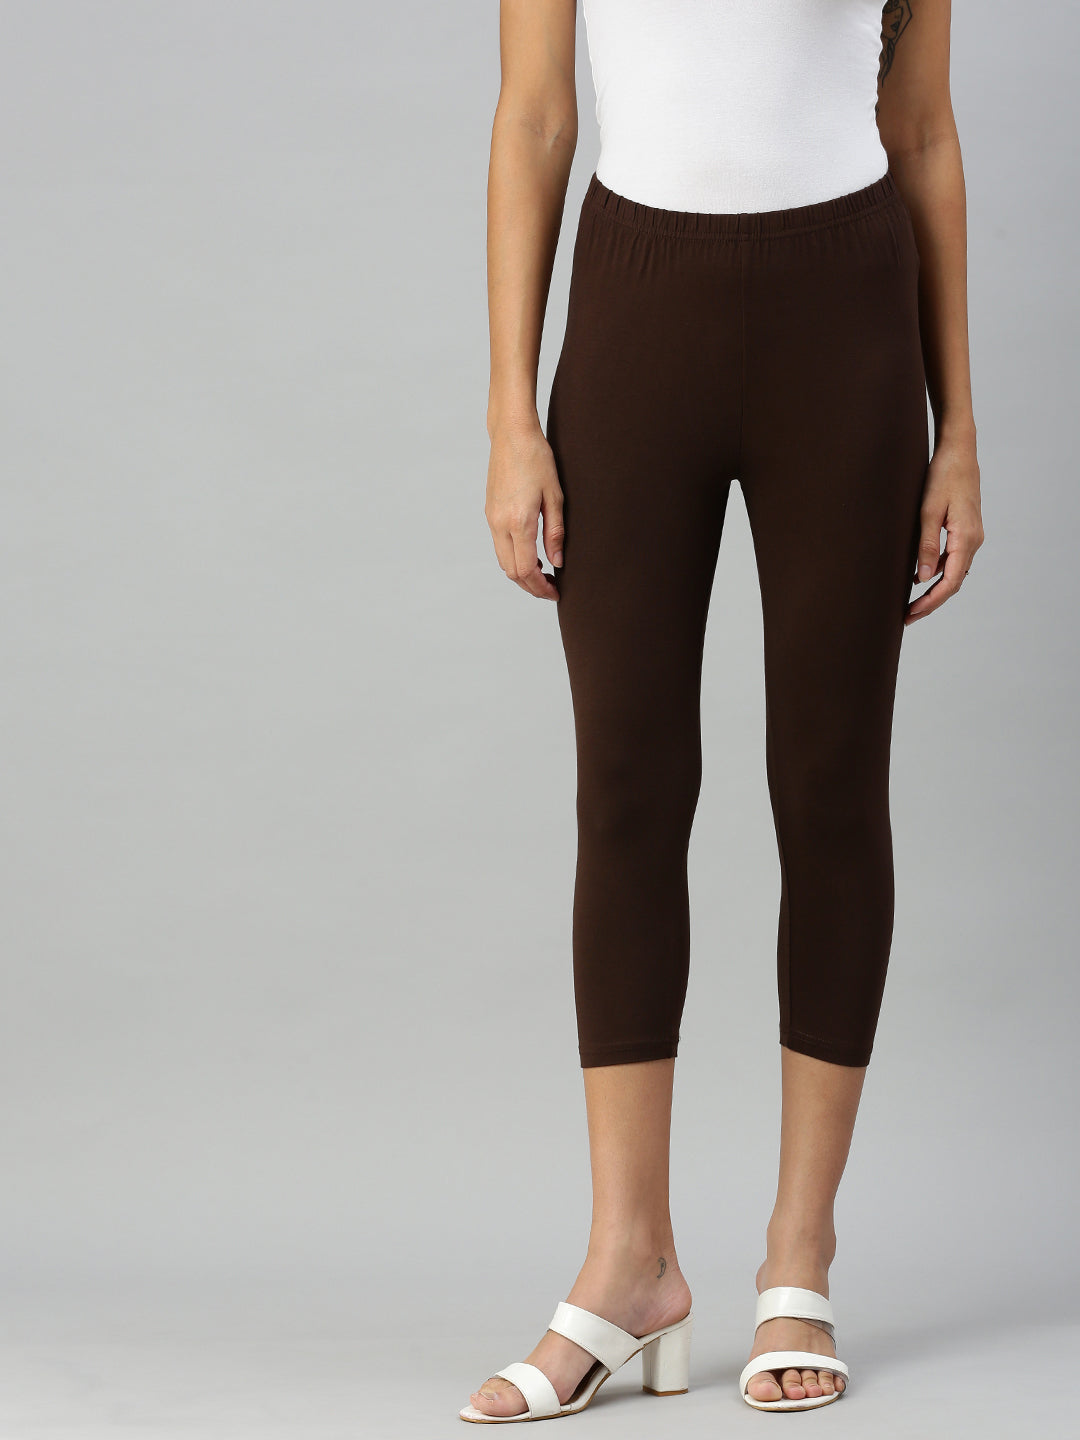 Women's Polyester Capri Leggings, Brown, One Size, 1 Piece